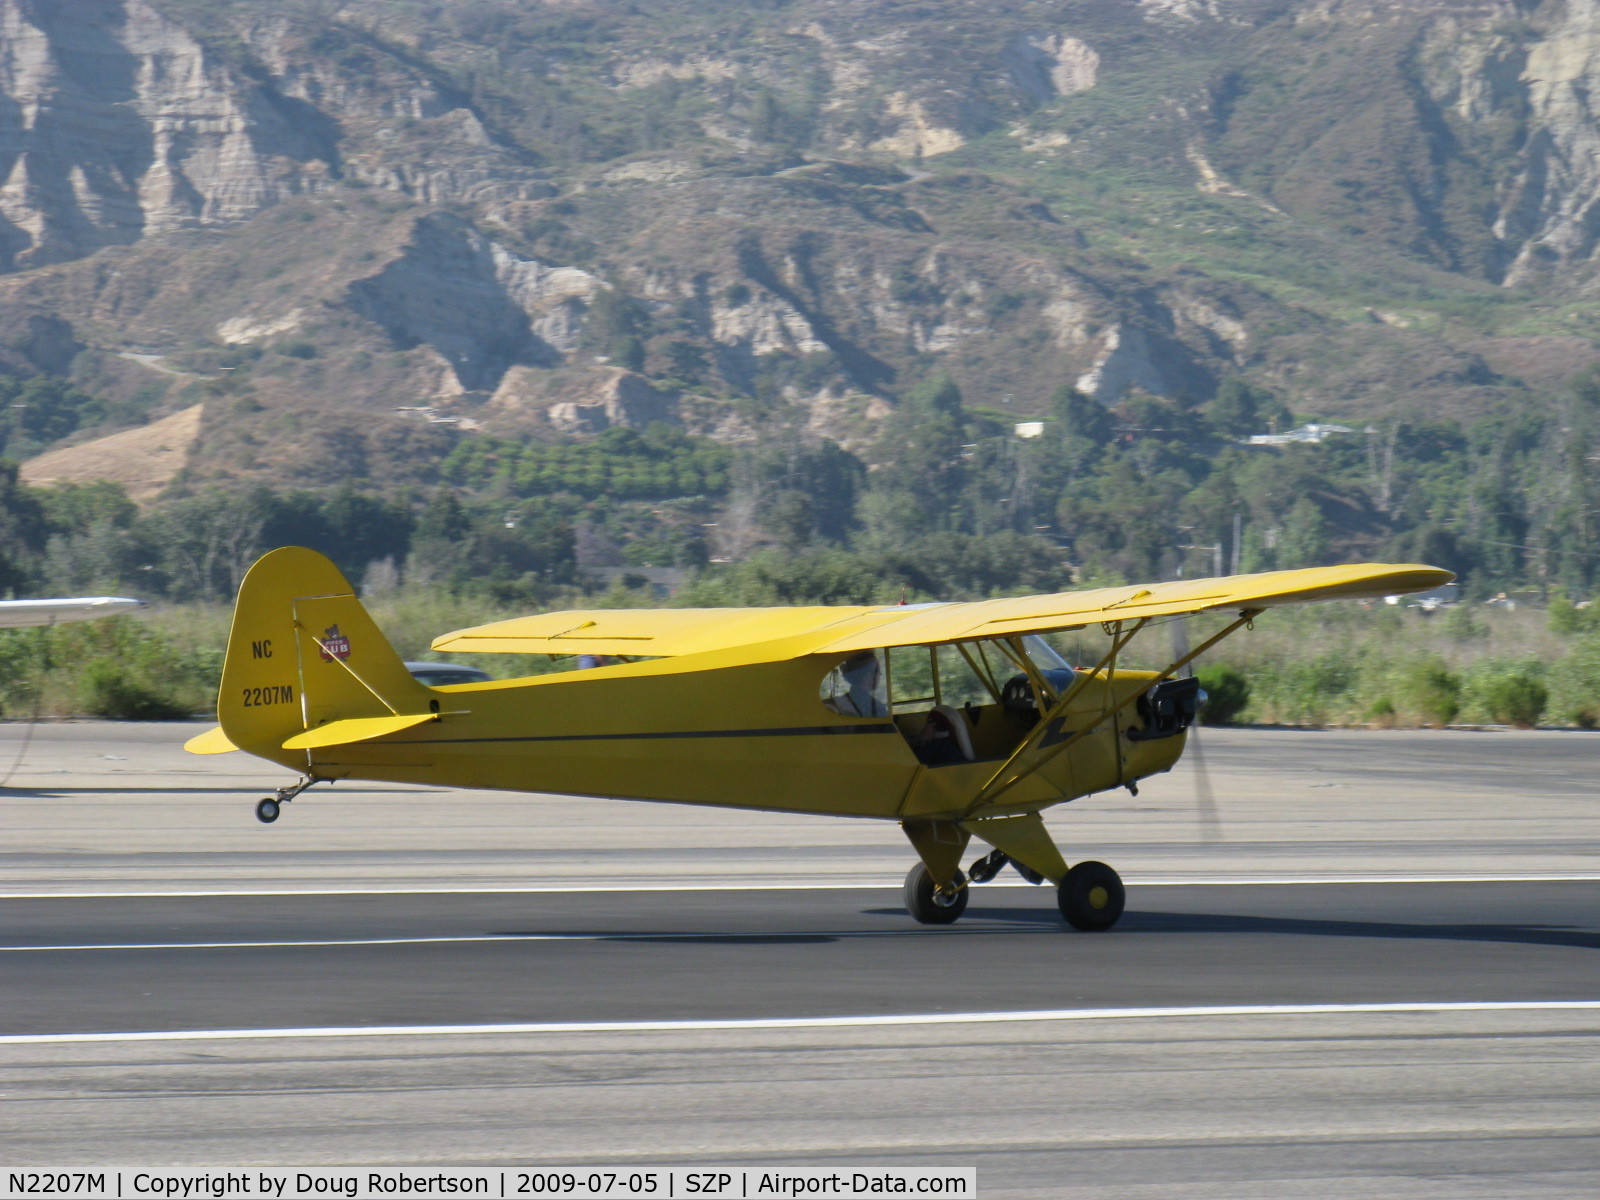 N2207M, 1946 Piper J3C-65 Cub Cub C/N 20995, 1946 Piper J3C-65 CUB, Continental A&C65 65 Hp, landing roll Rwy 22